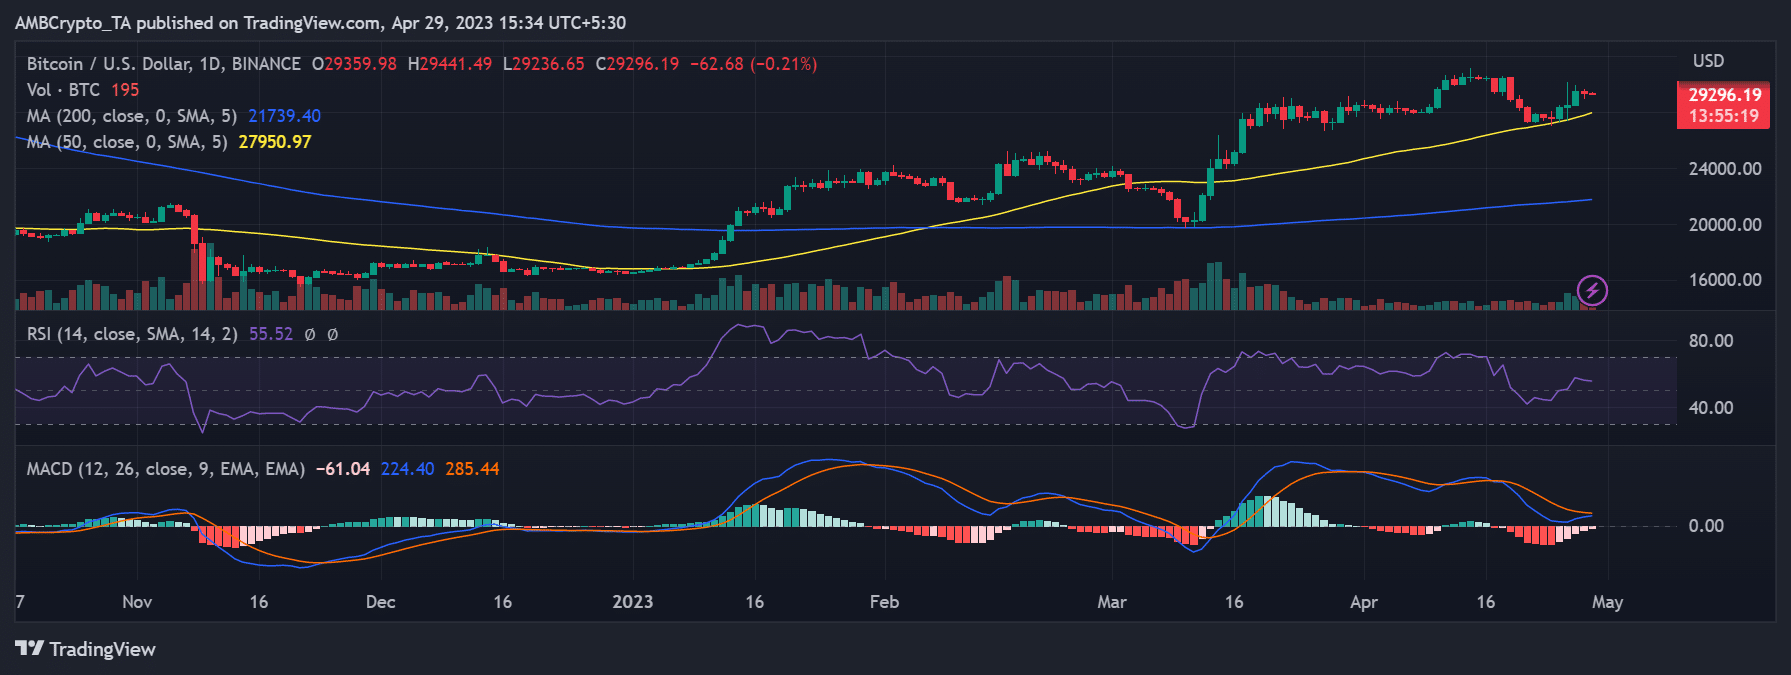 BTC/USD price move